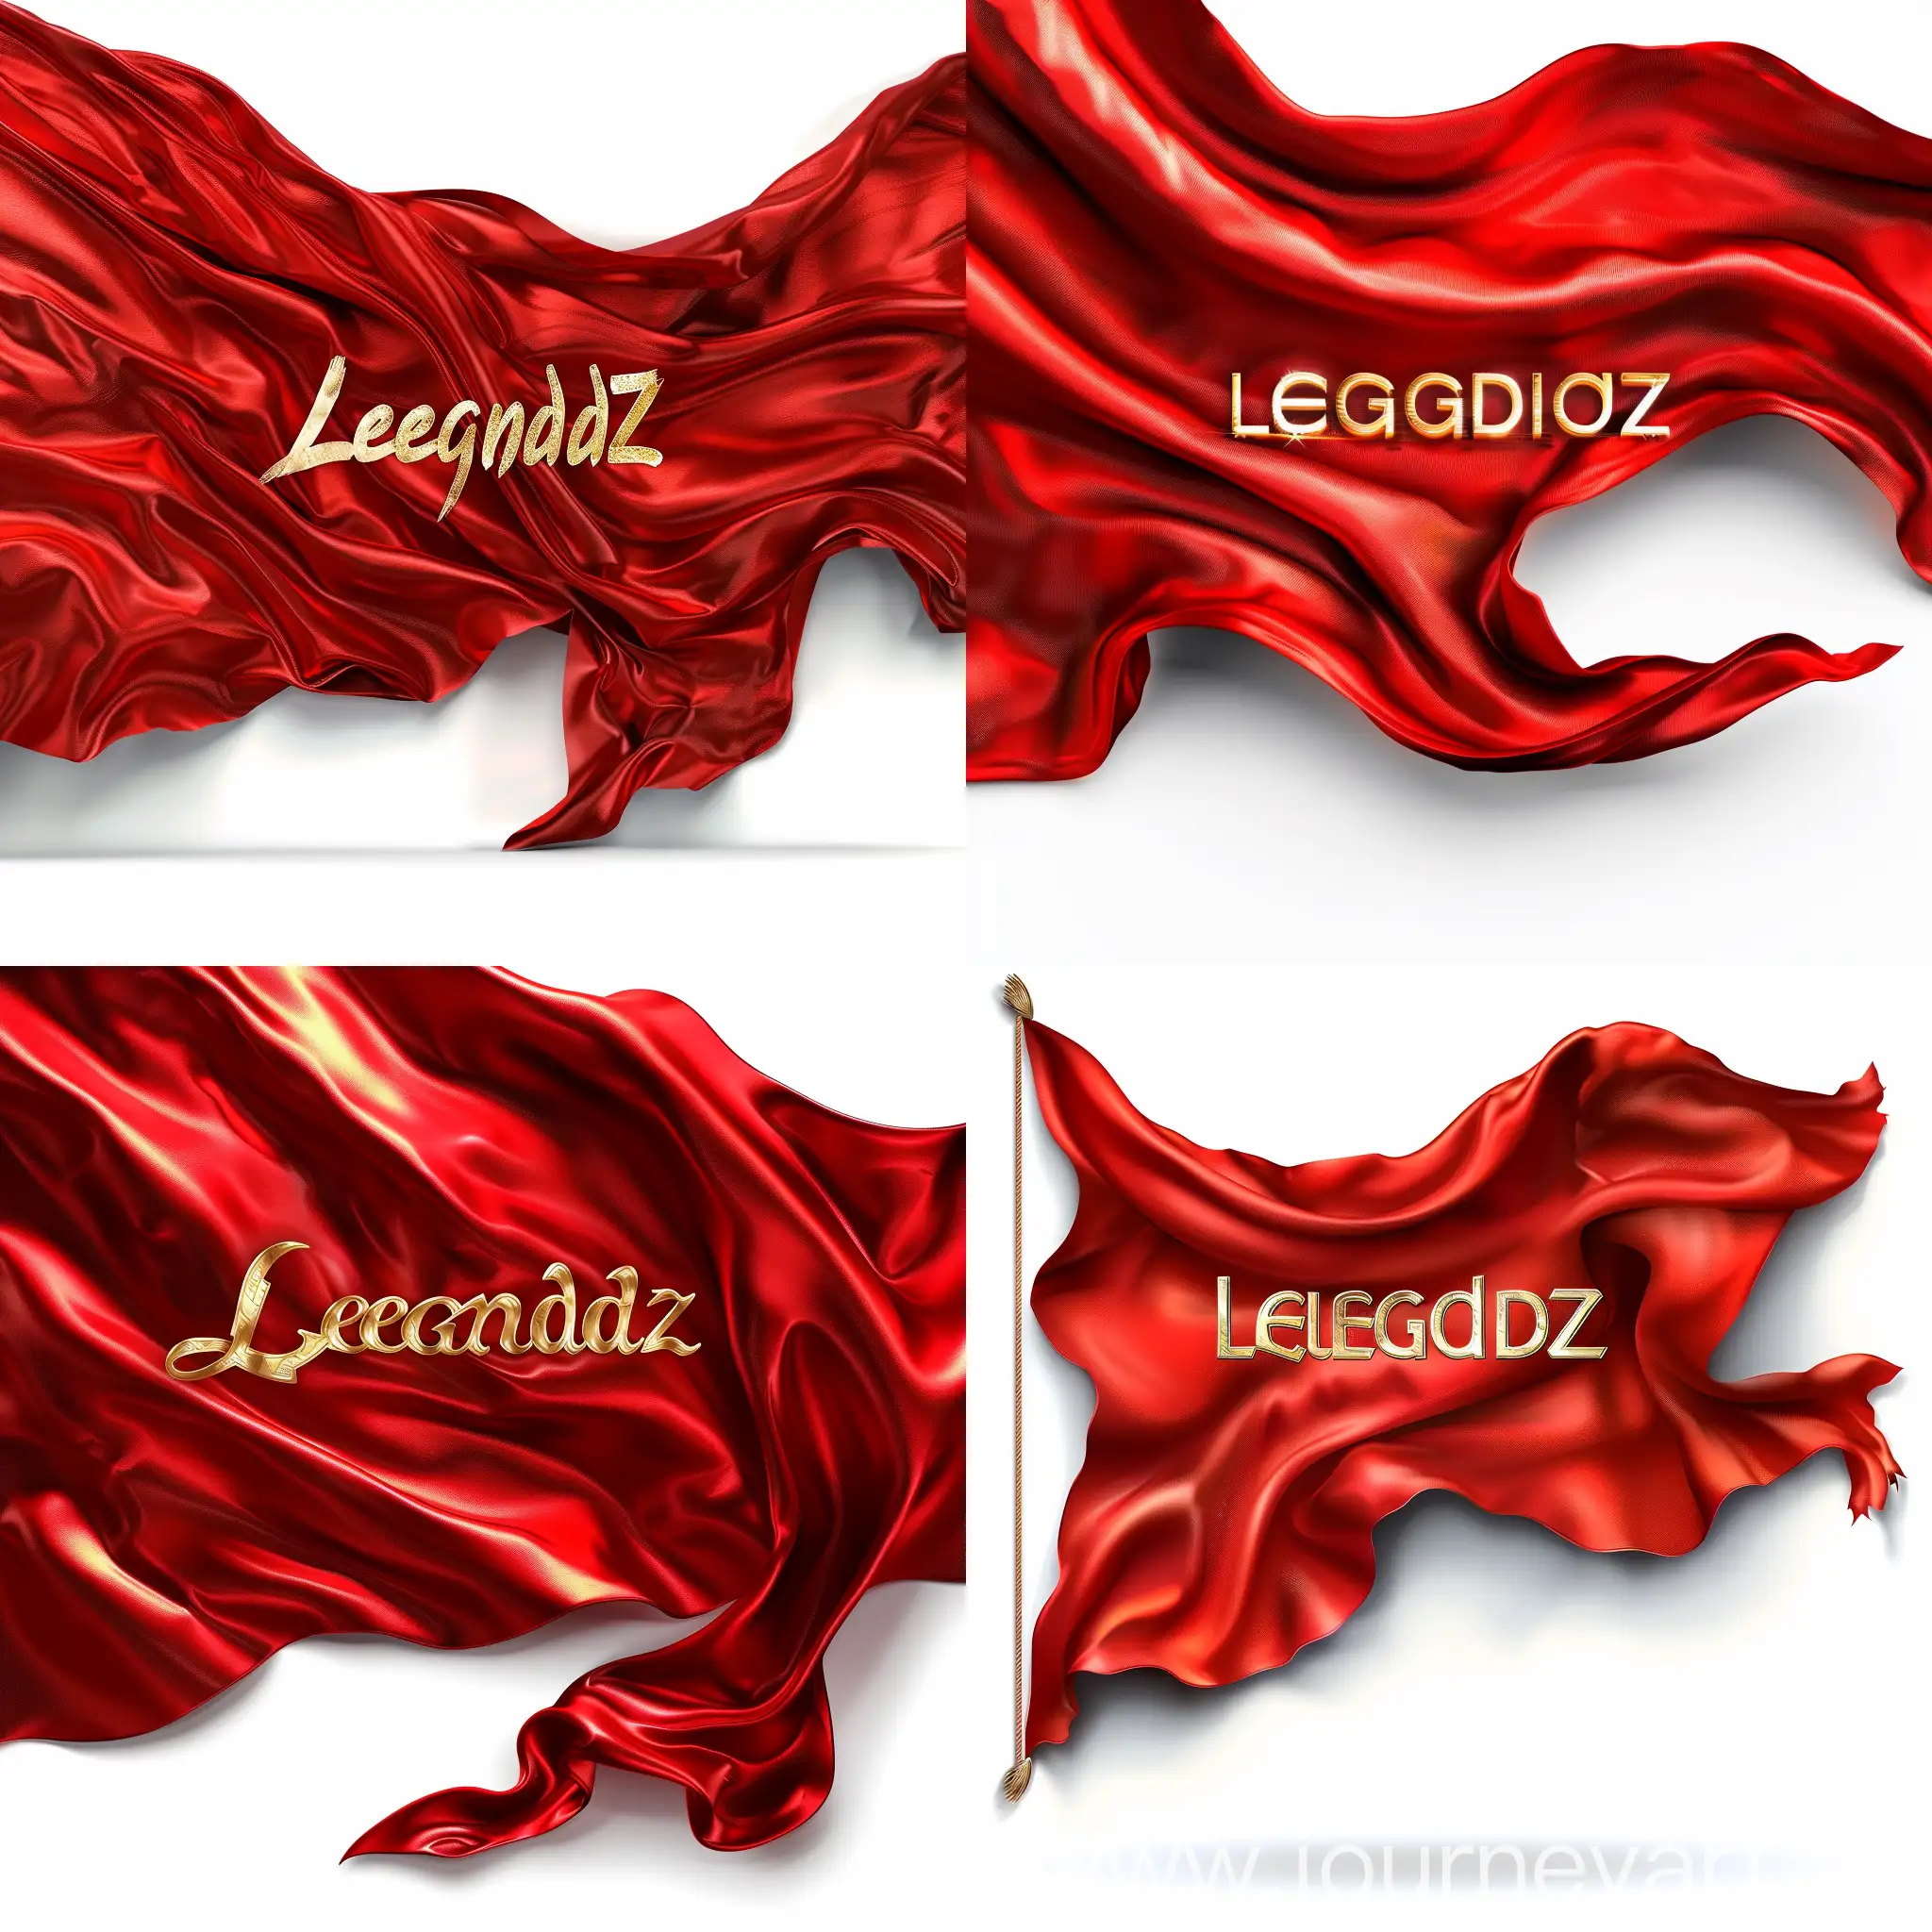 Elegant-Red-Silk-Legendz-Banner-Fluttering-Against-White-Background